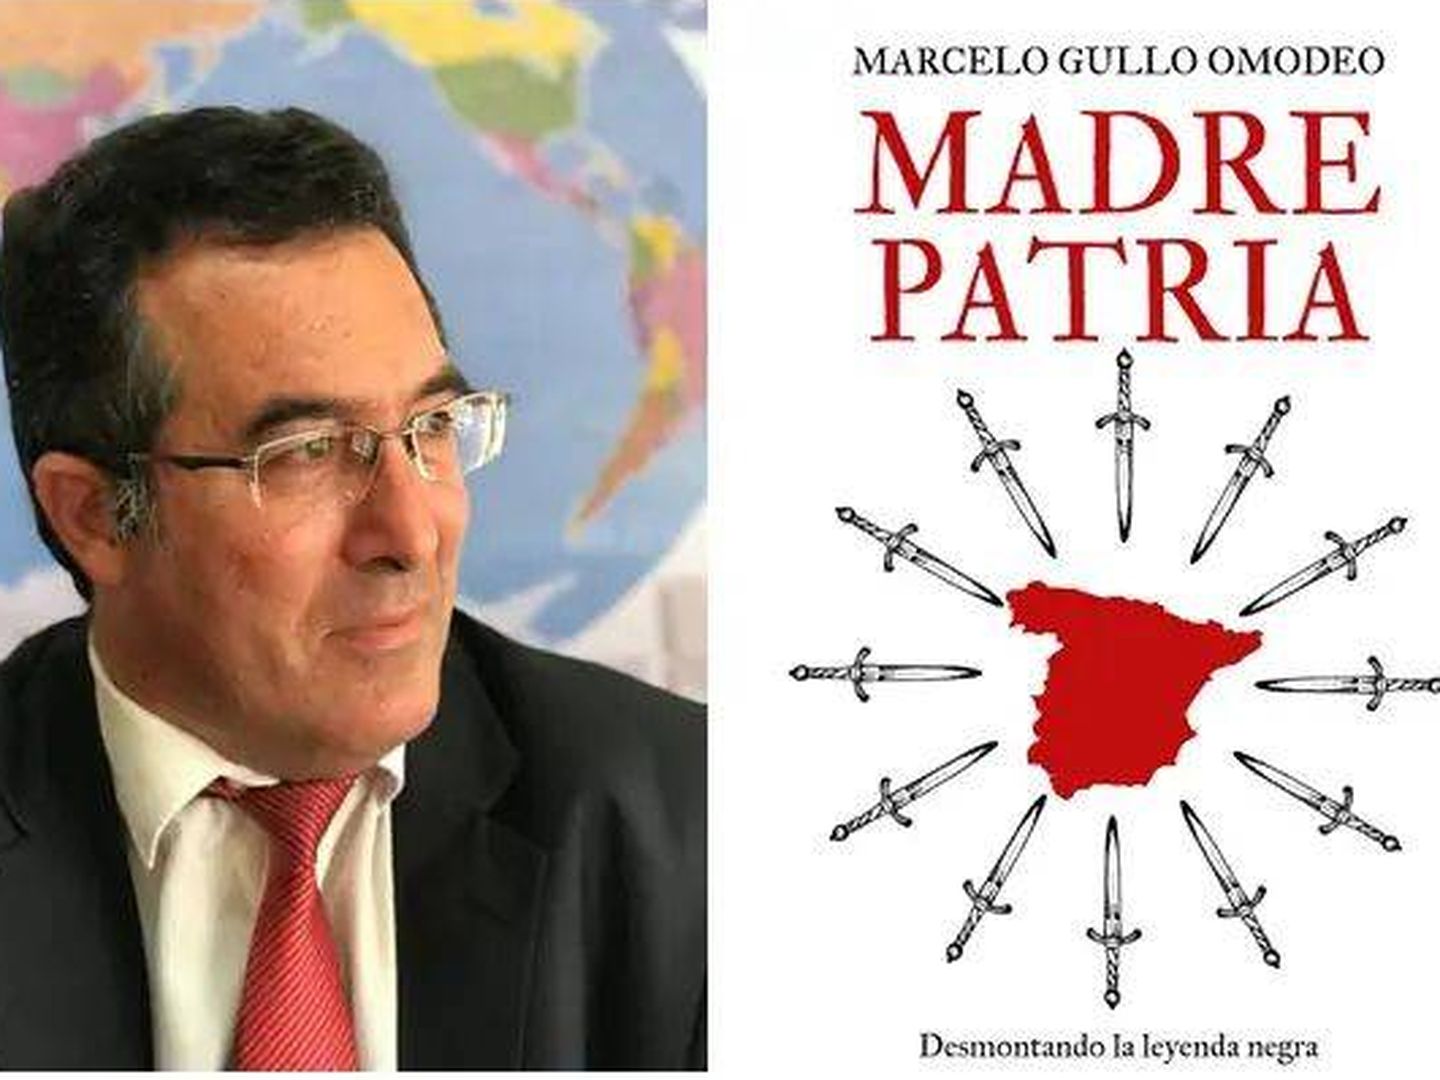 El profesor Marcelo Gullo Omedeo, autor de 'Madre patria', (Espasa).